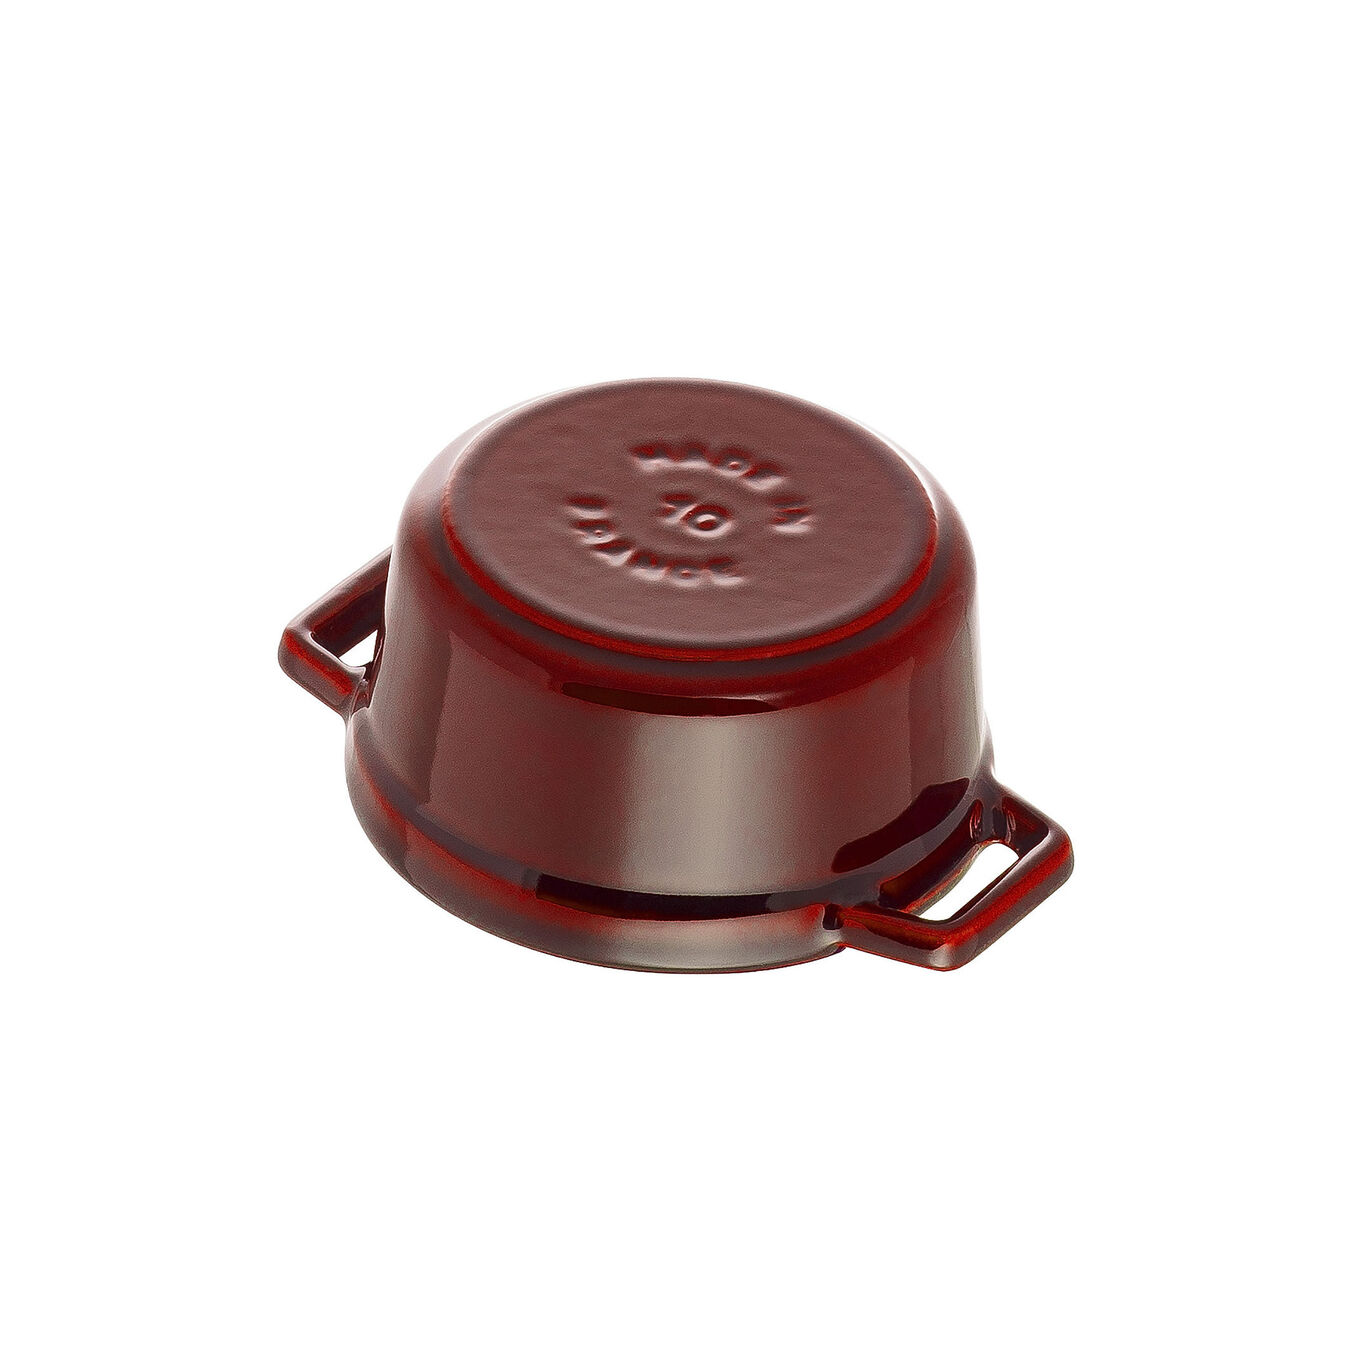 10 cm round Cast iron Mini Cocotte grenadine-red,,large 4